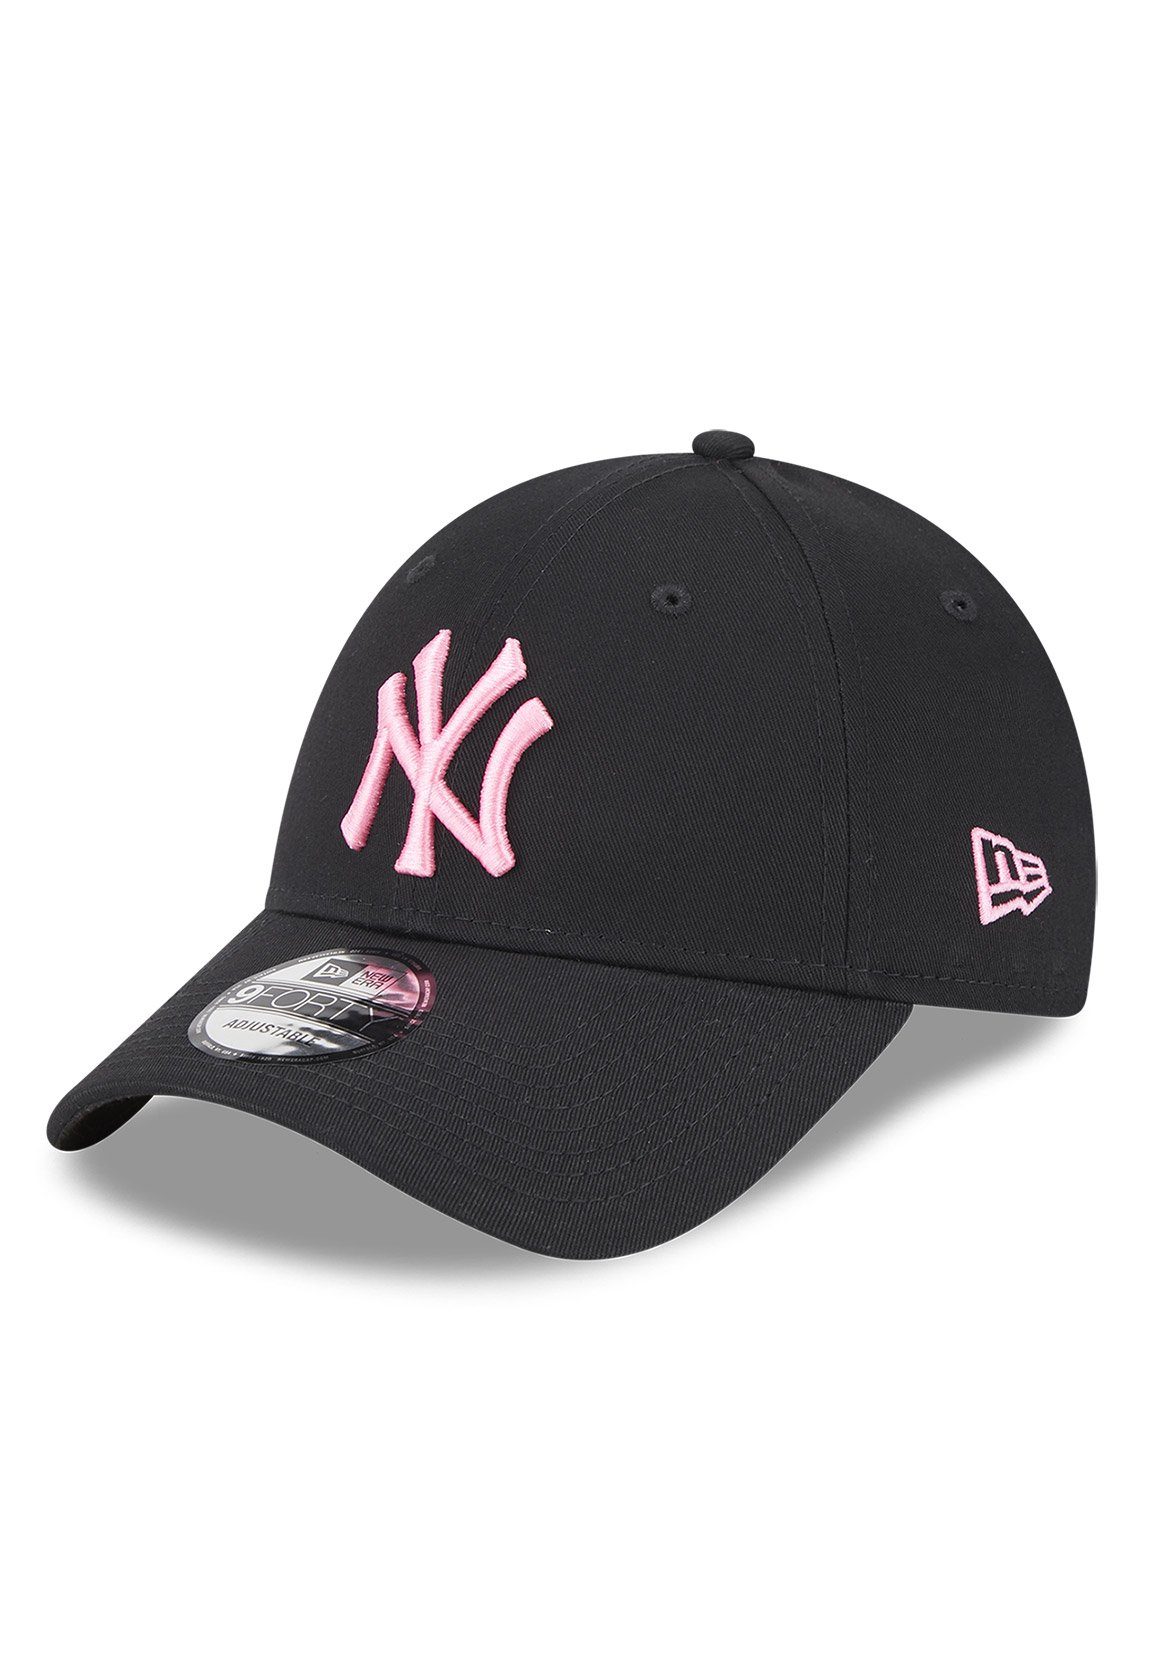 New Era Baseball Cap New Era Neon 9Forty Adjustable Cap NY YANKEES Schwarz Pink schwarz-pink